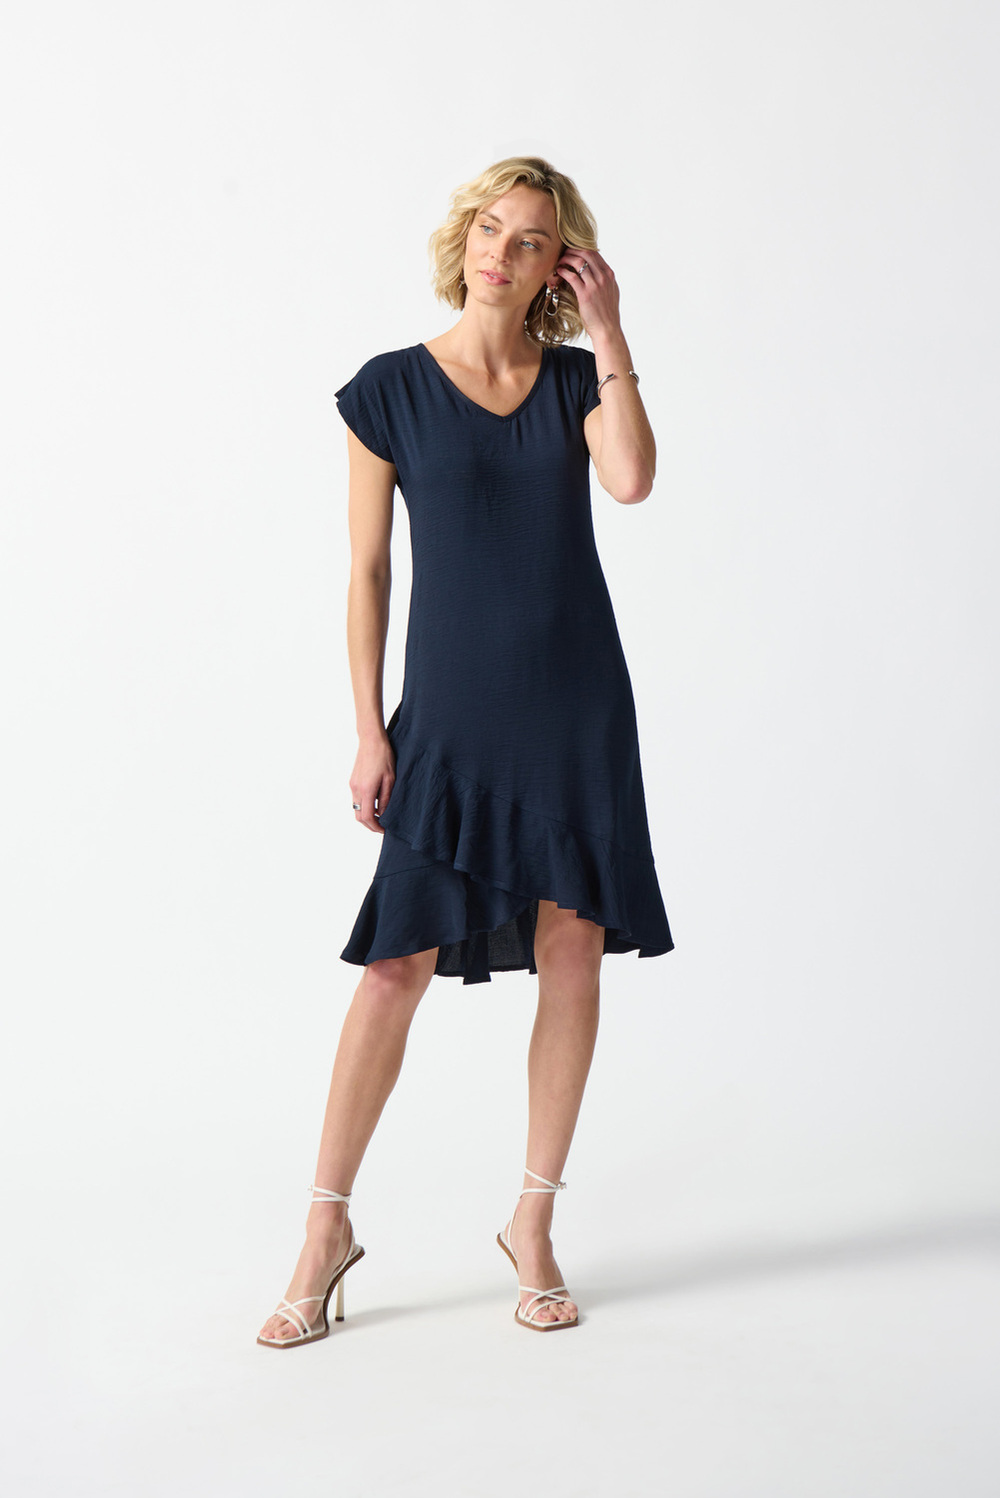 Ruffle Hem Dress Style 242206. Midnight Blue